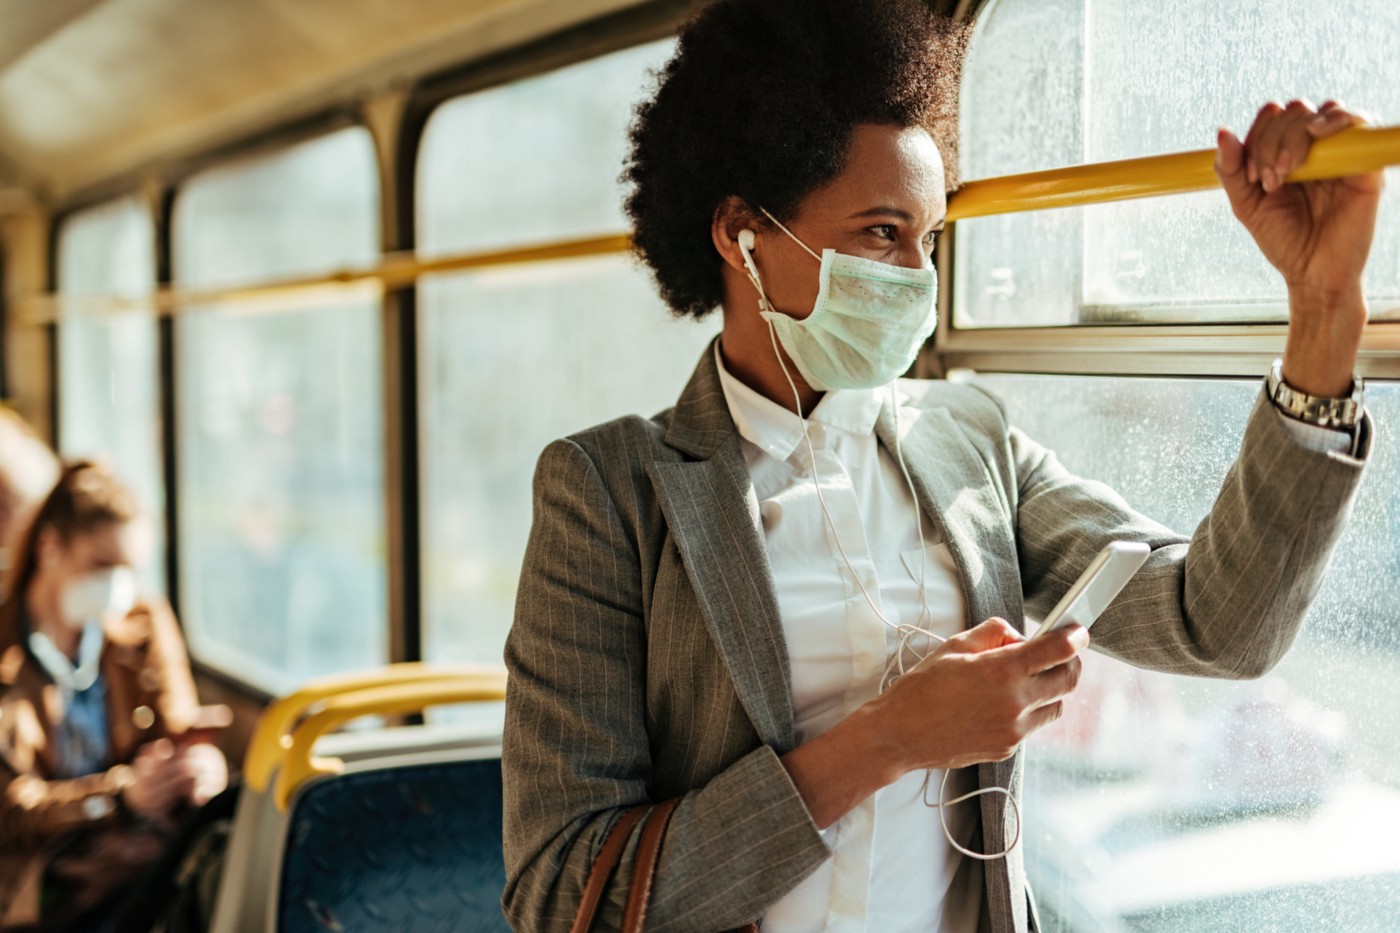 Woman rides public transit while wearing face mask